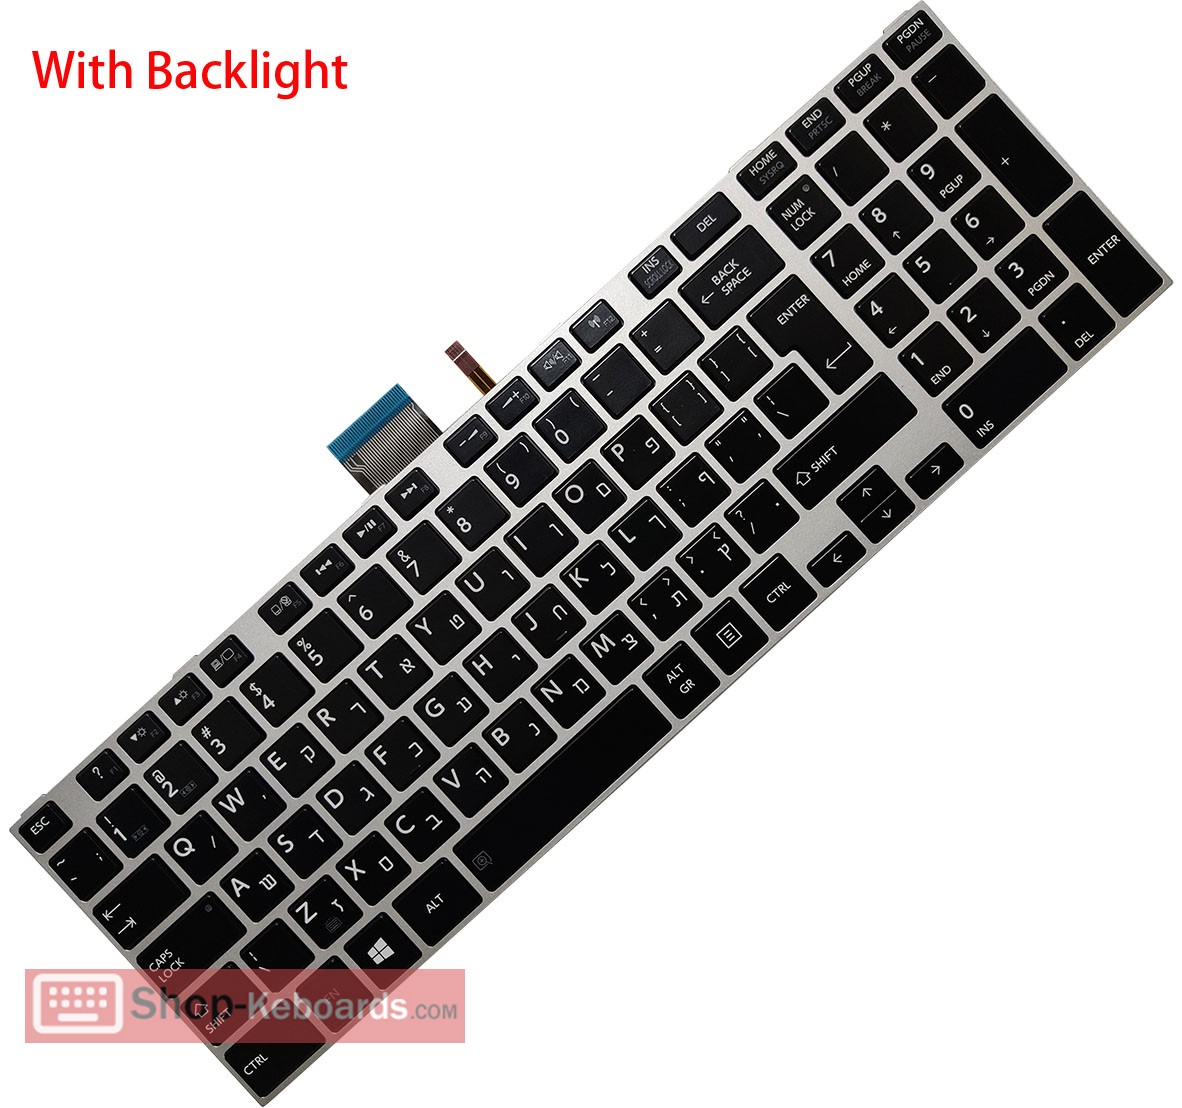 Toshiba V143045AK1 Keyboard replacement